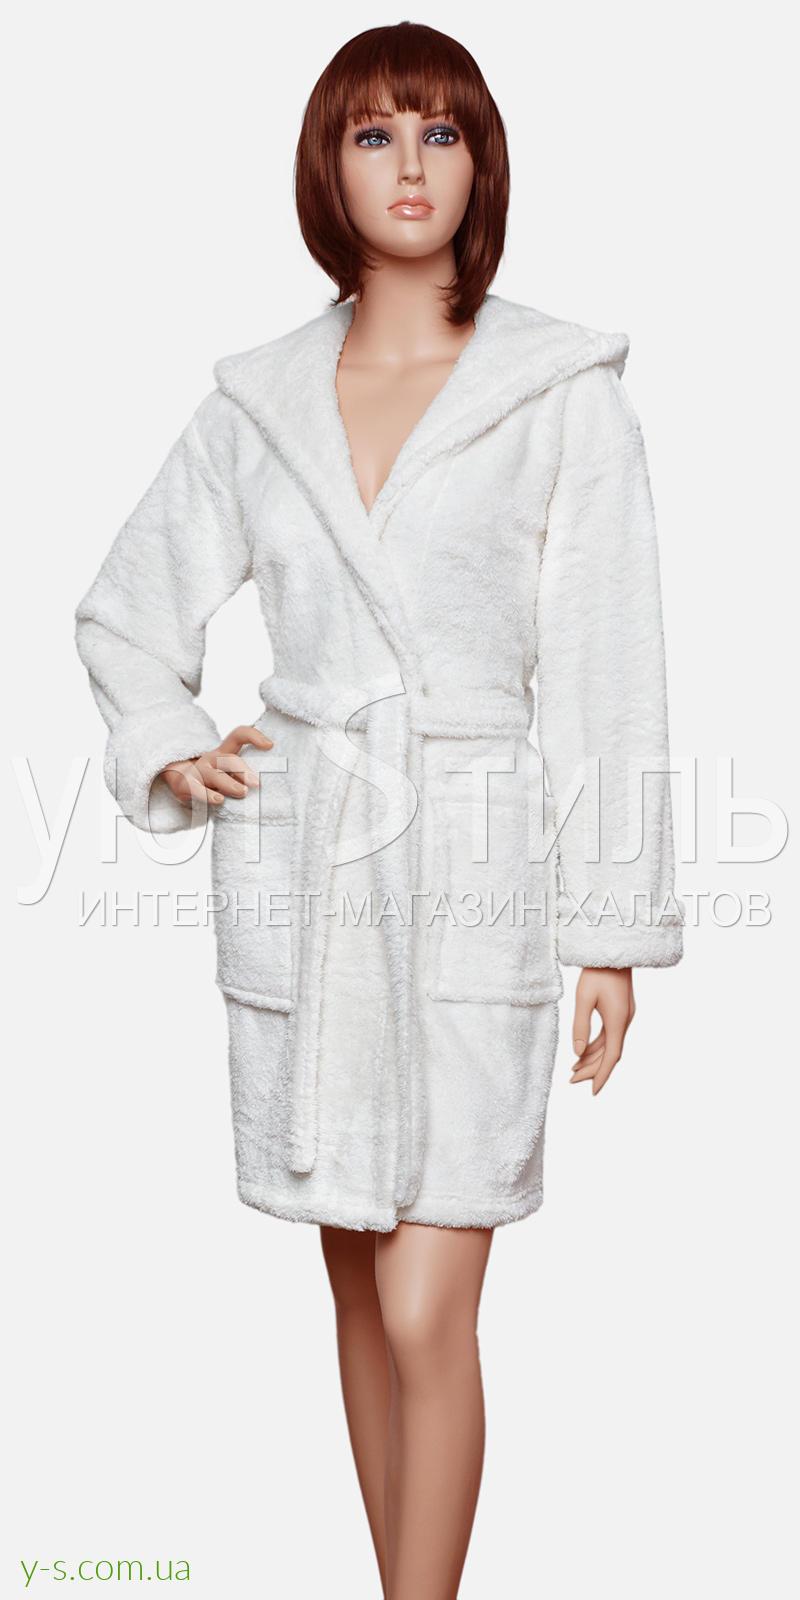 Білий жіночий пухнастий халат з капюшоном EX2138